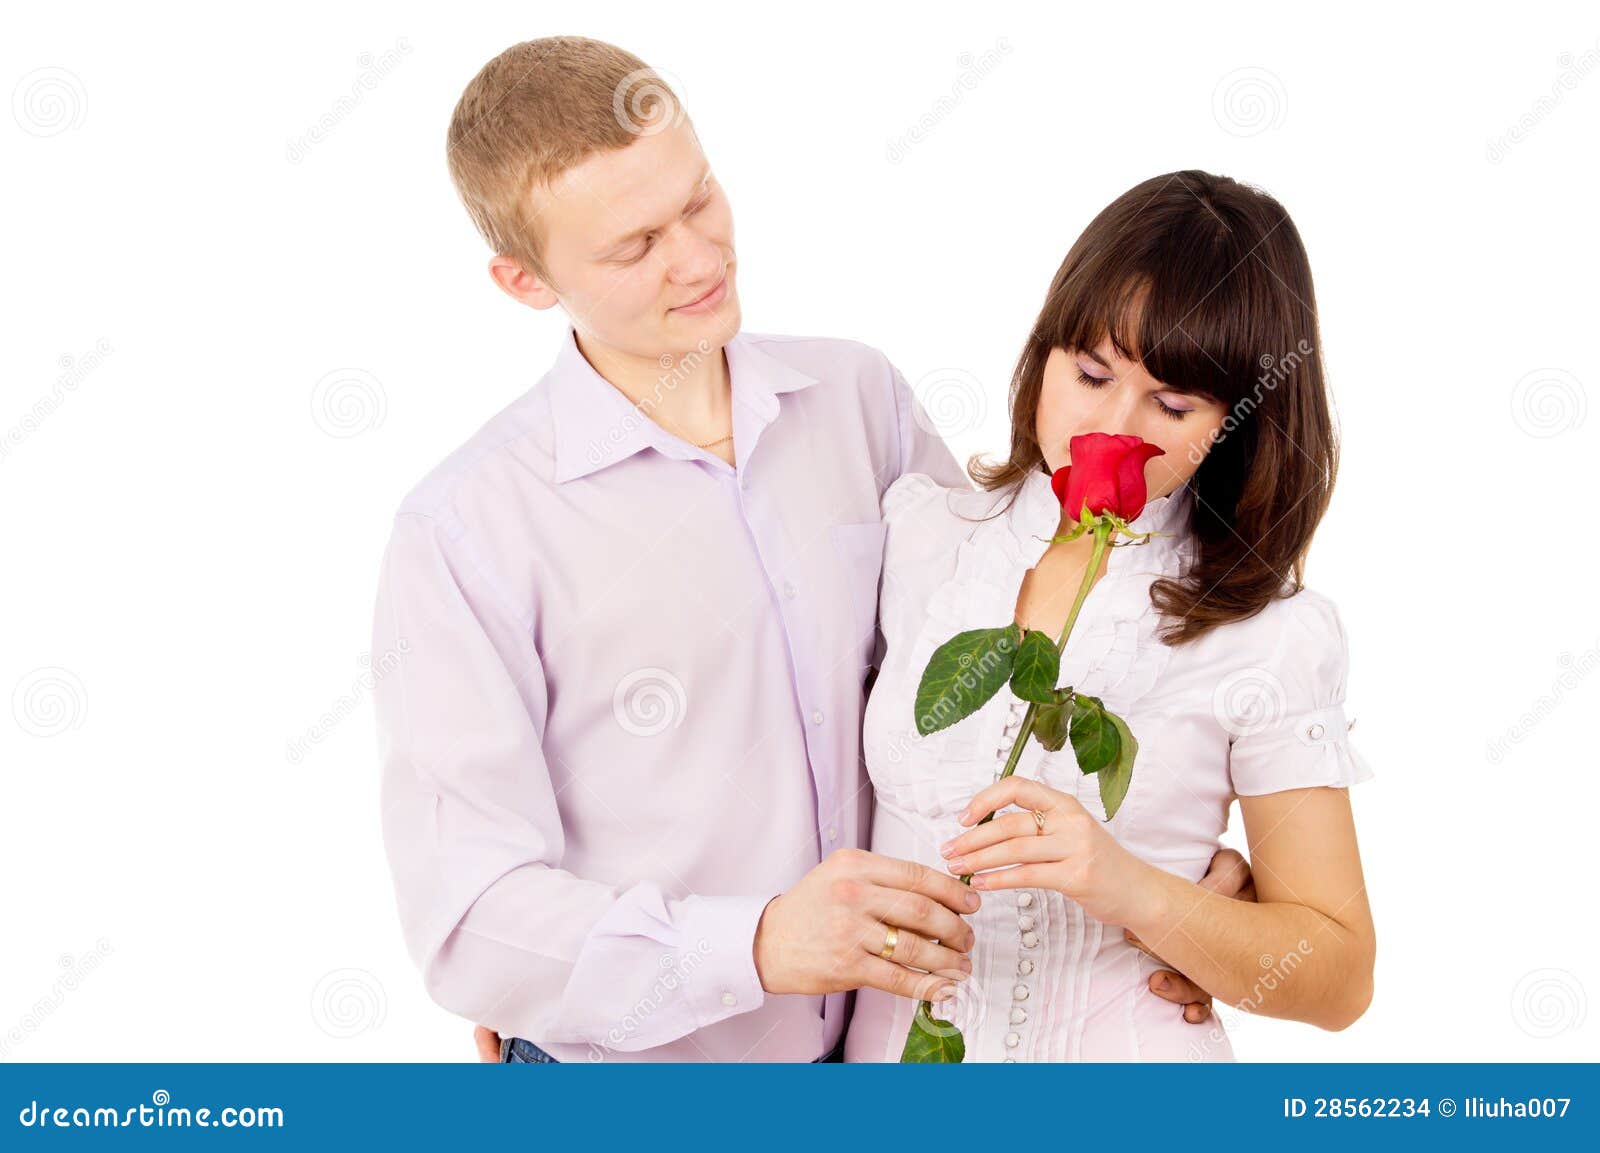 https://thumbs.dreamstime.com/z/guy-makes-proposal-to-girl-rose-28562234.jpg